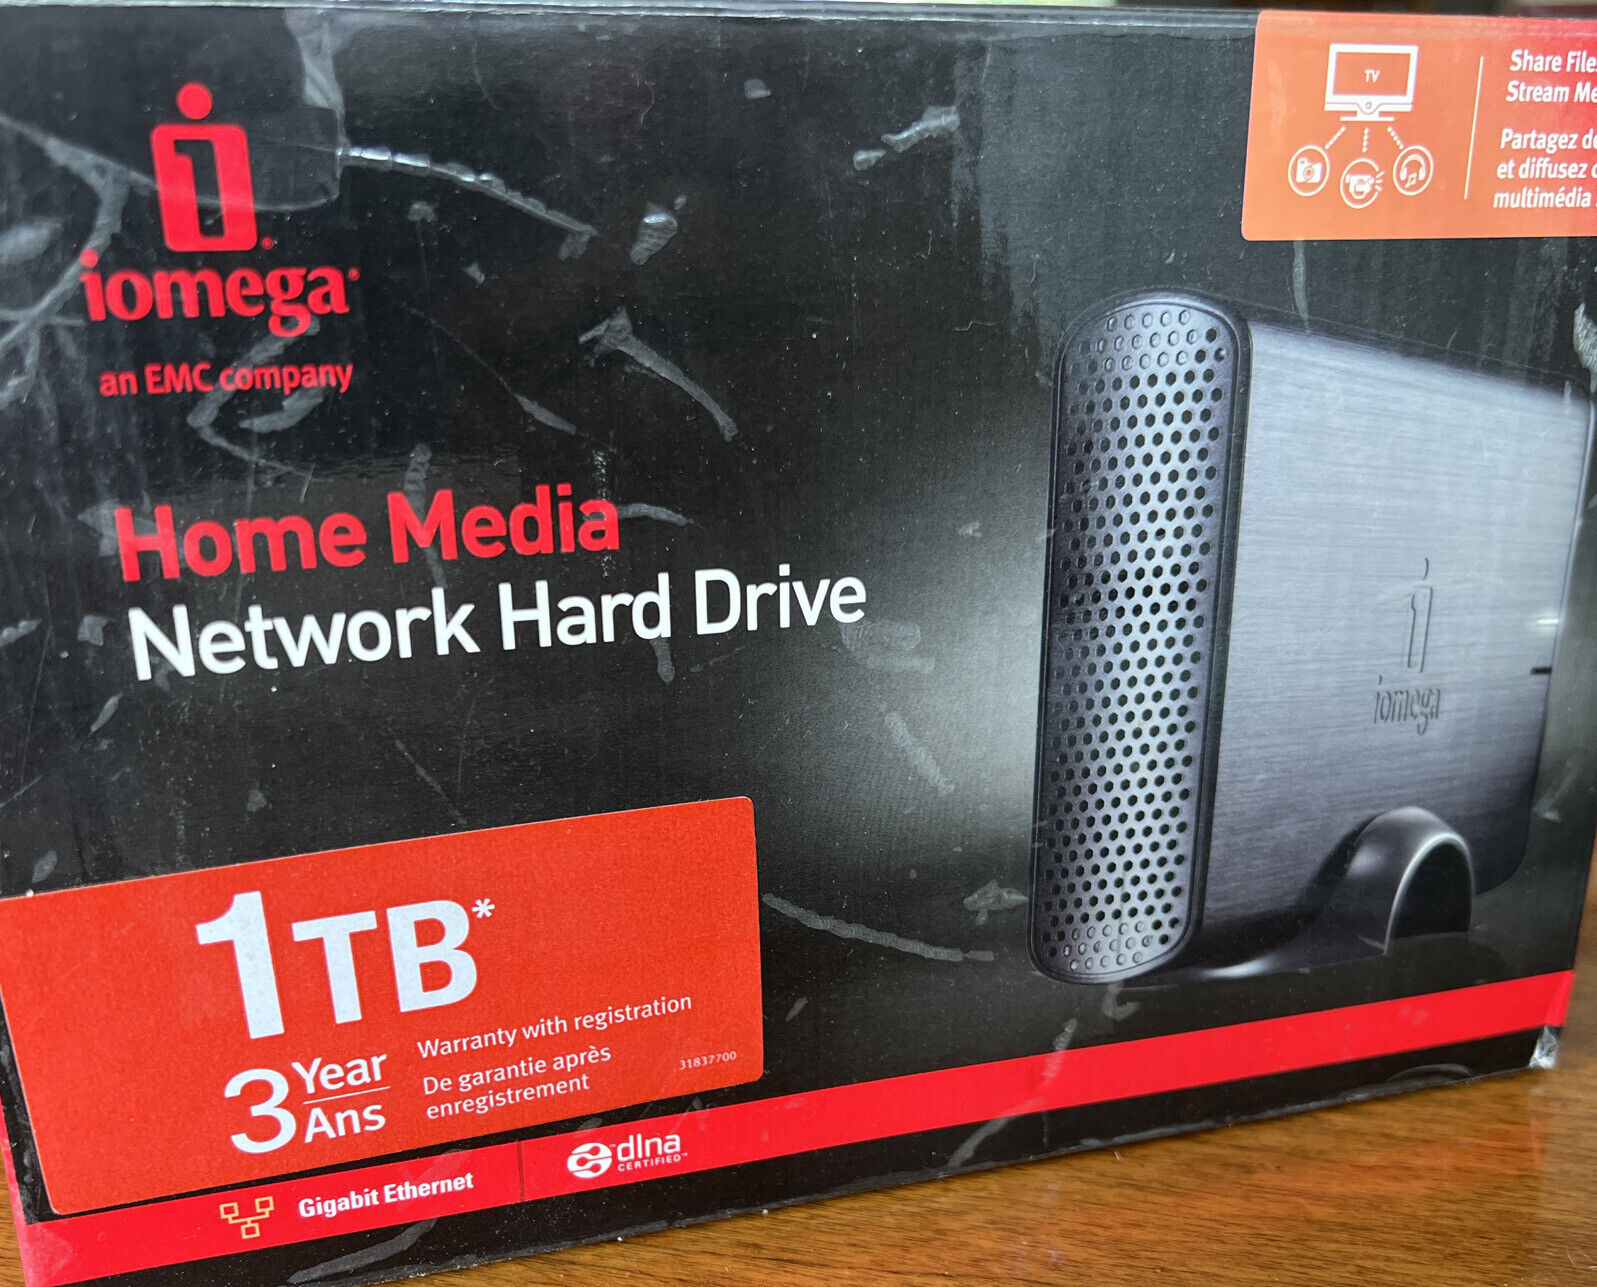 Iomega Home Media Network Hard Drive 1TB